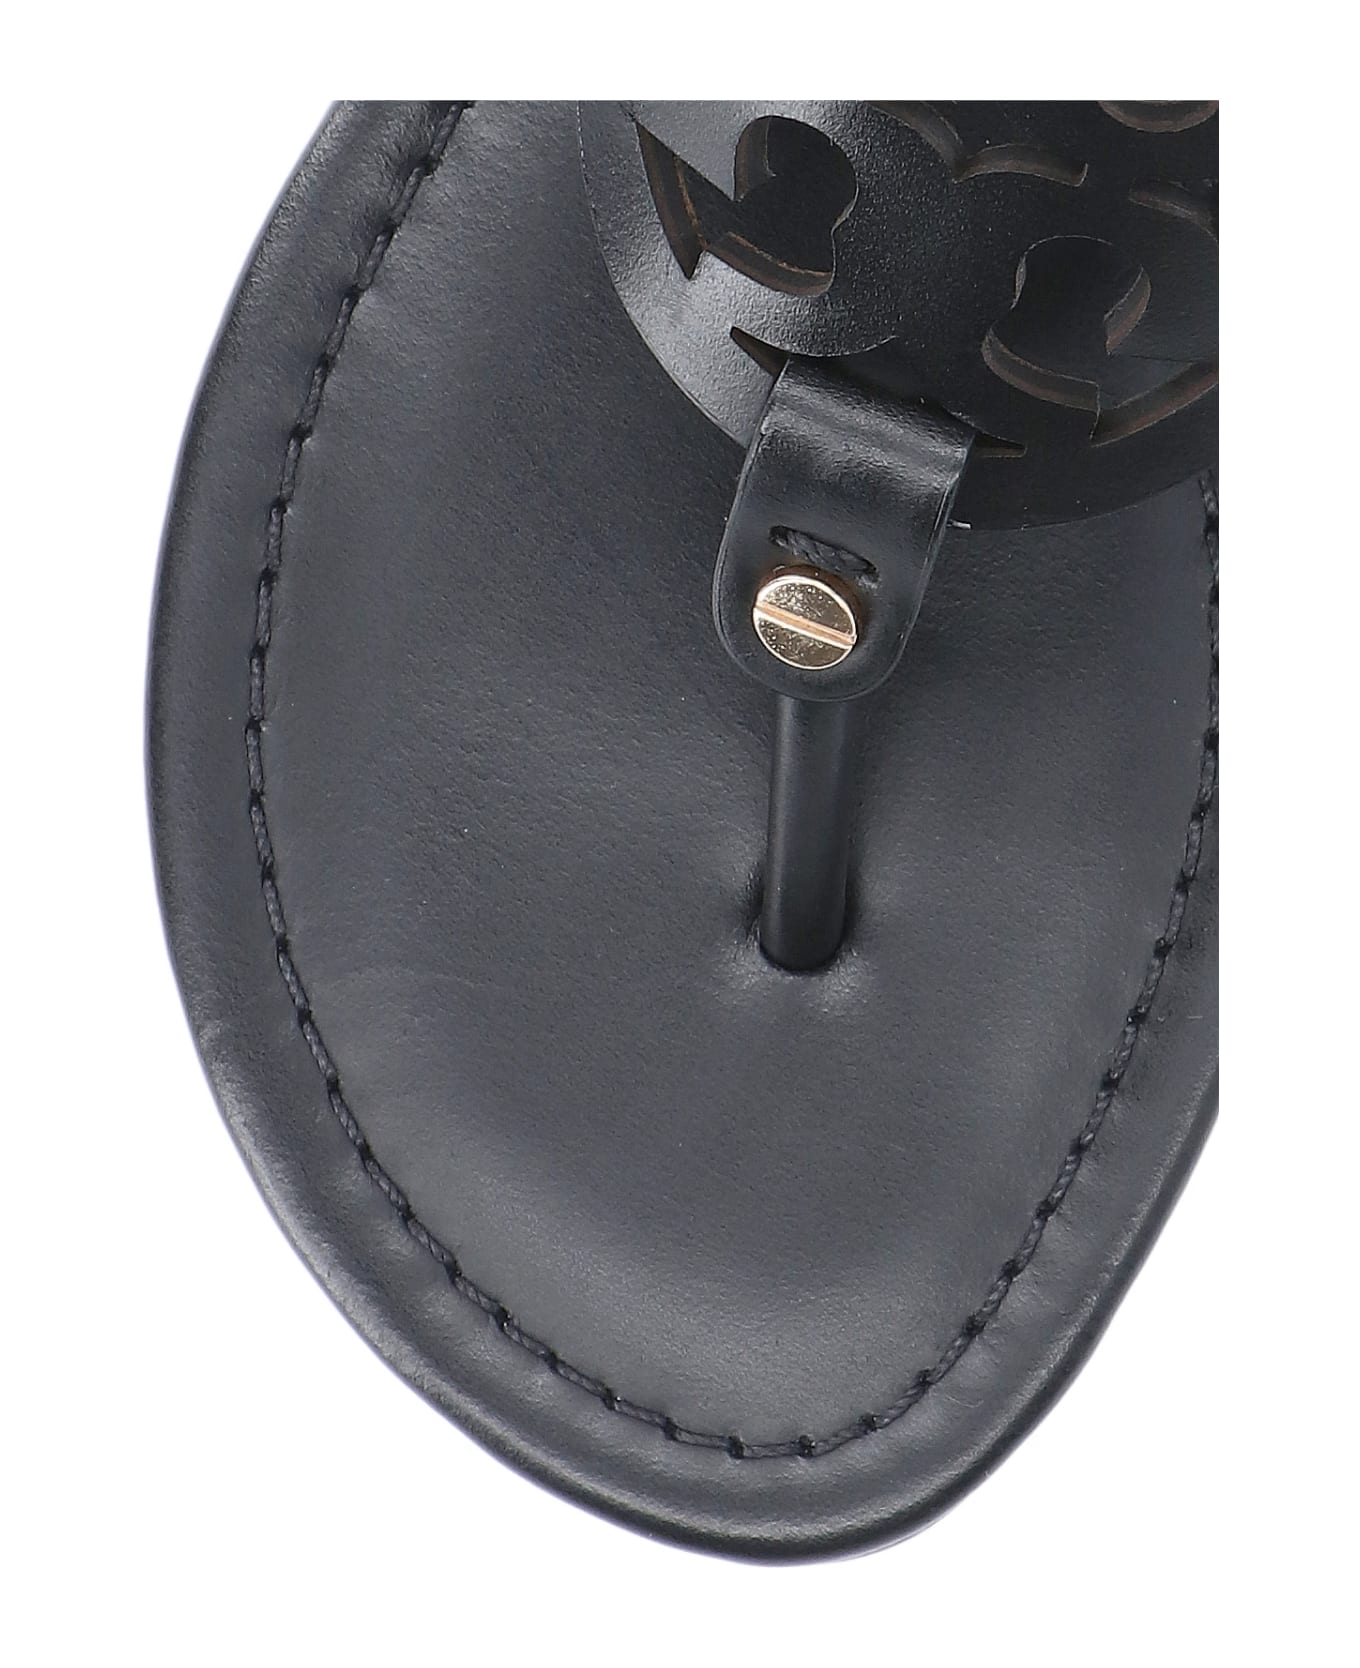 Tory Burch Miller Calf Leather Sandal - Black